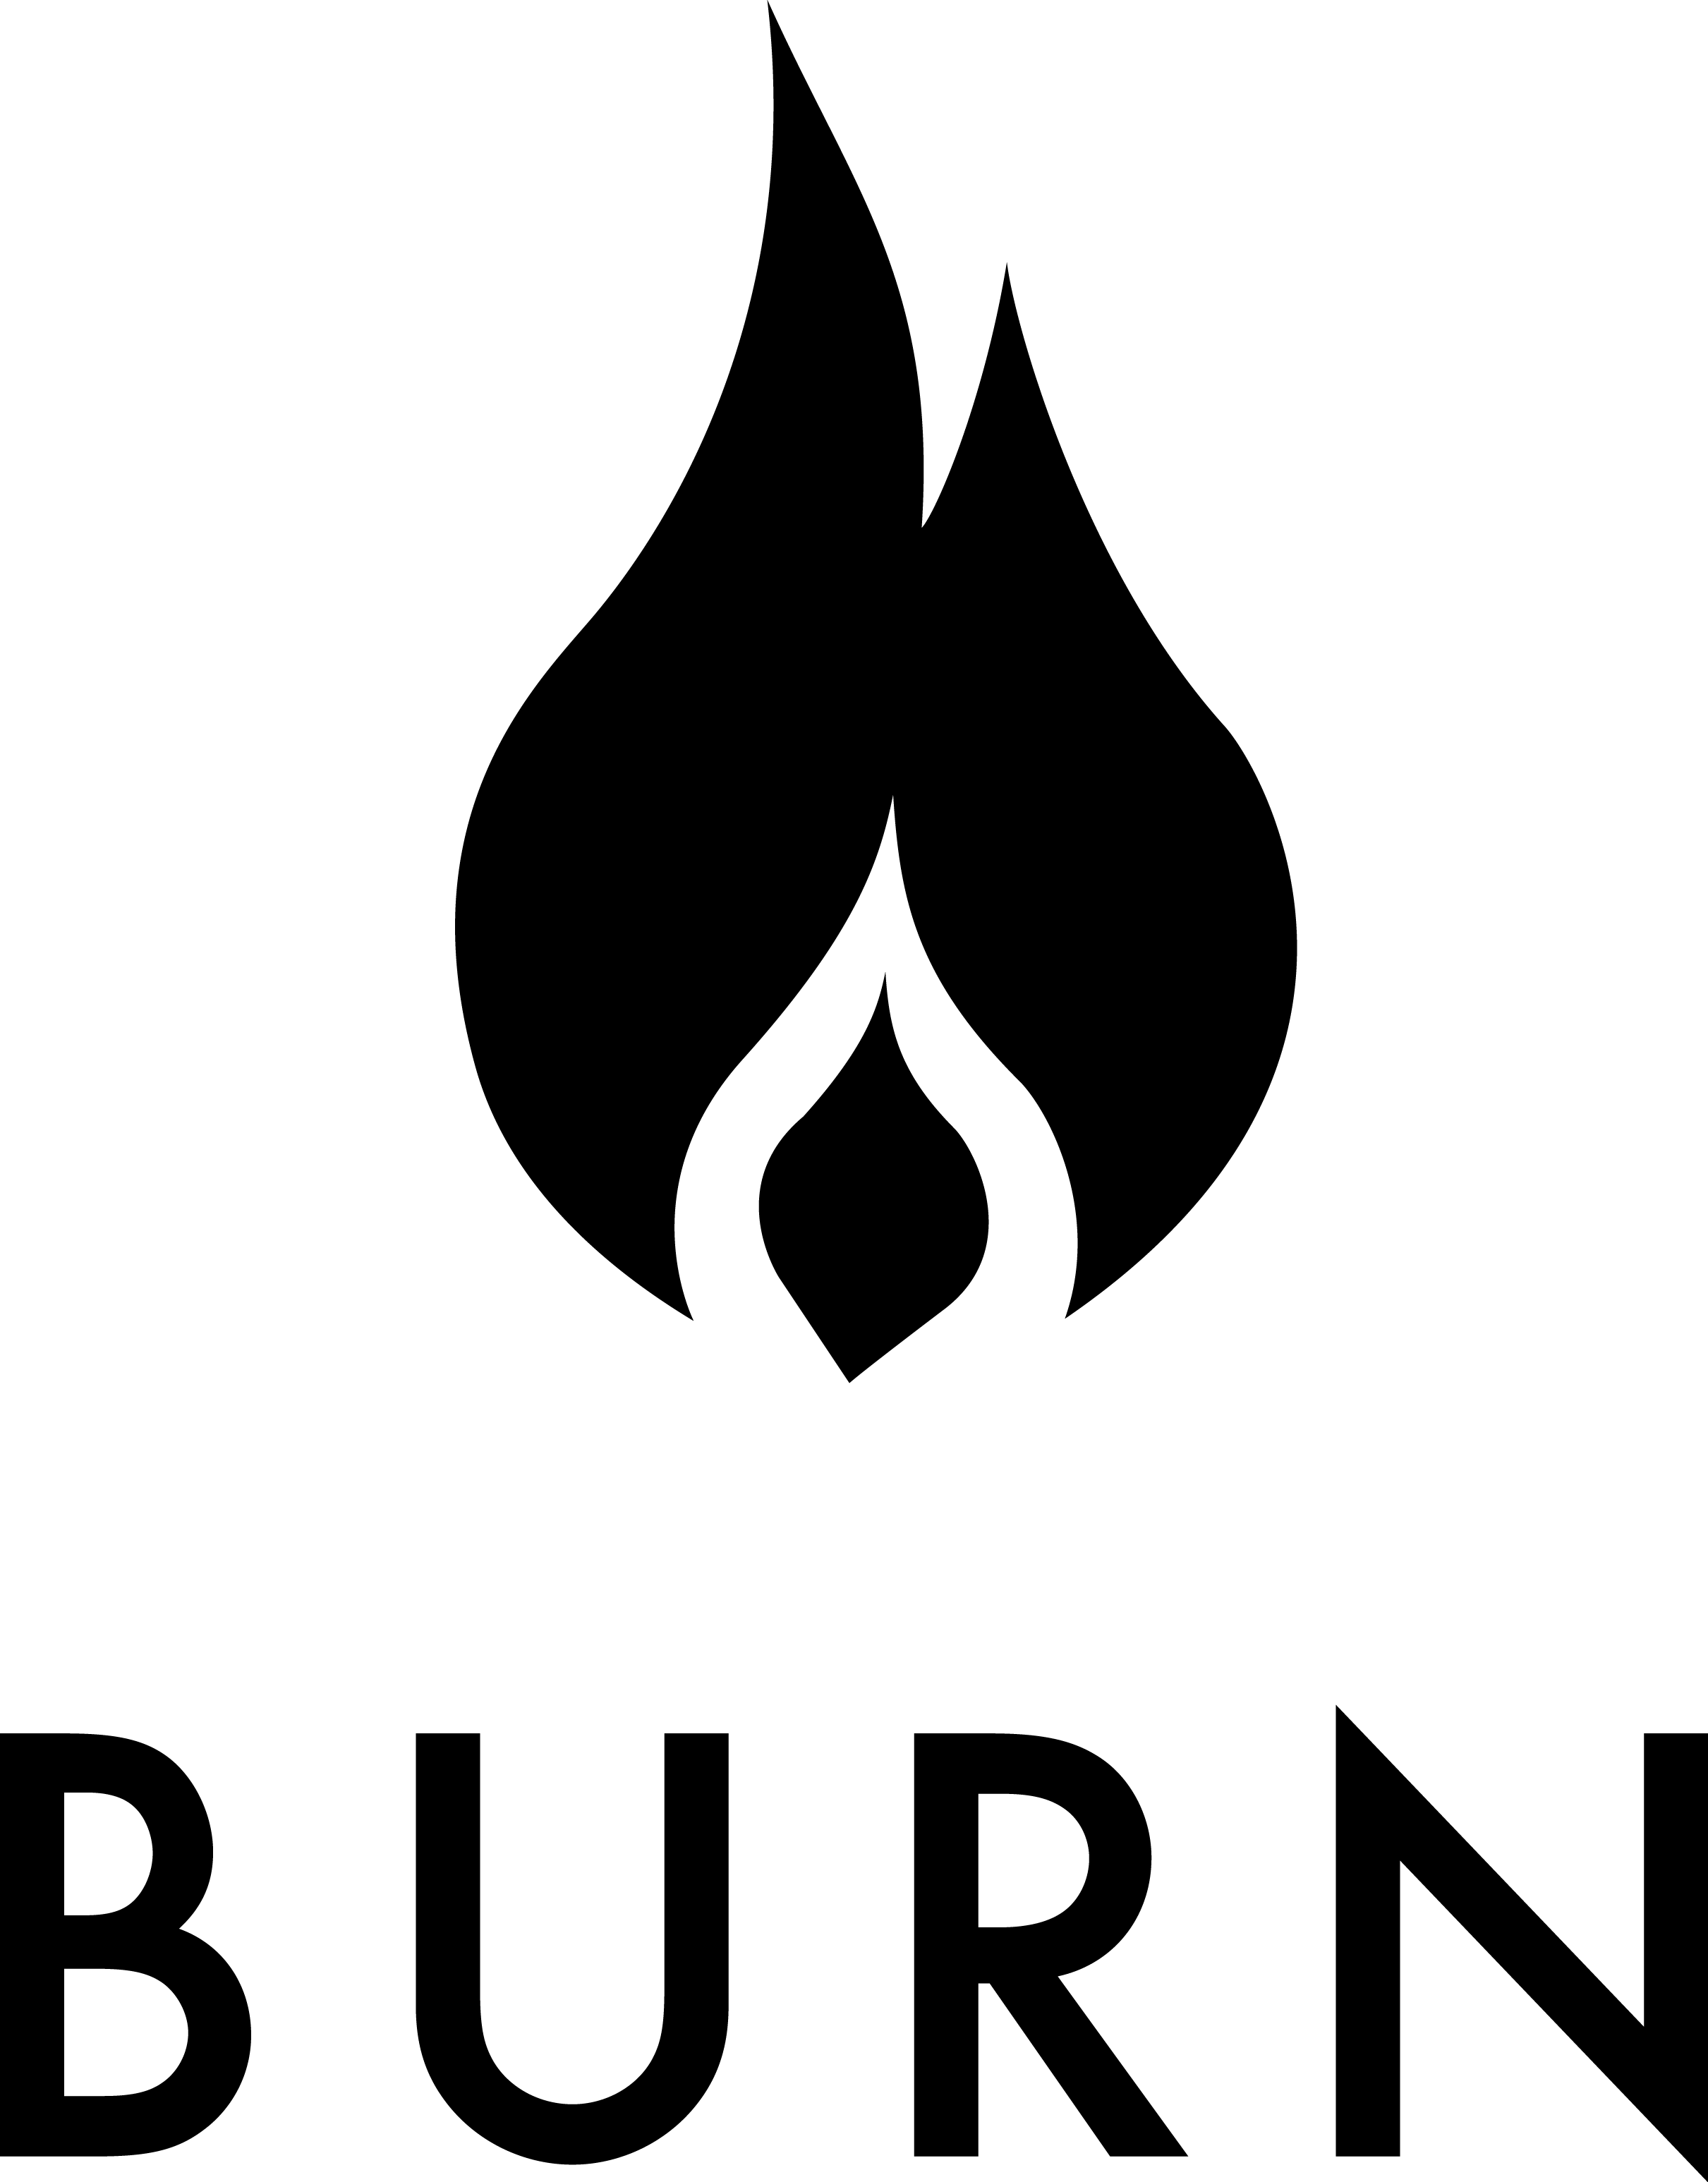 Burn Logo - Burning Log PNG Transparent Burning Log.PNG Images. | PlusPNG